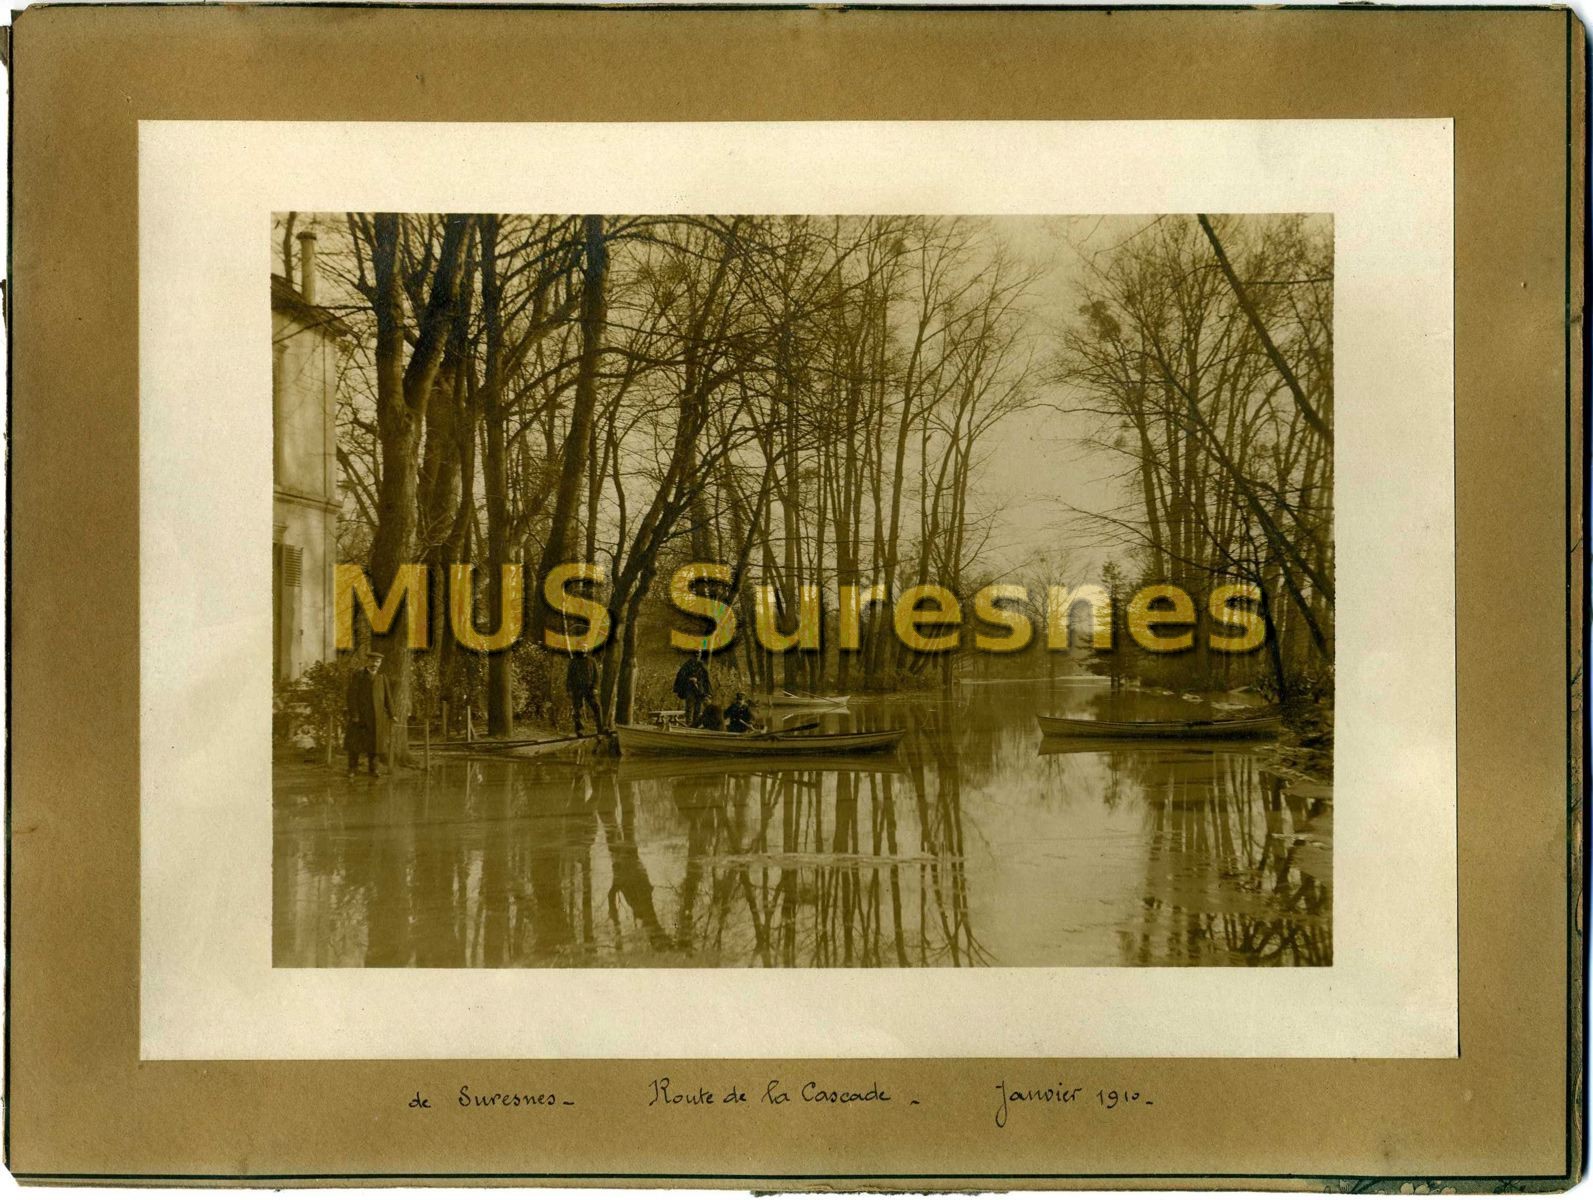 Inondations de Suresnes - Route de la Cascade -Janvier 1910